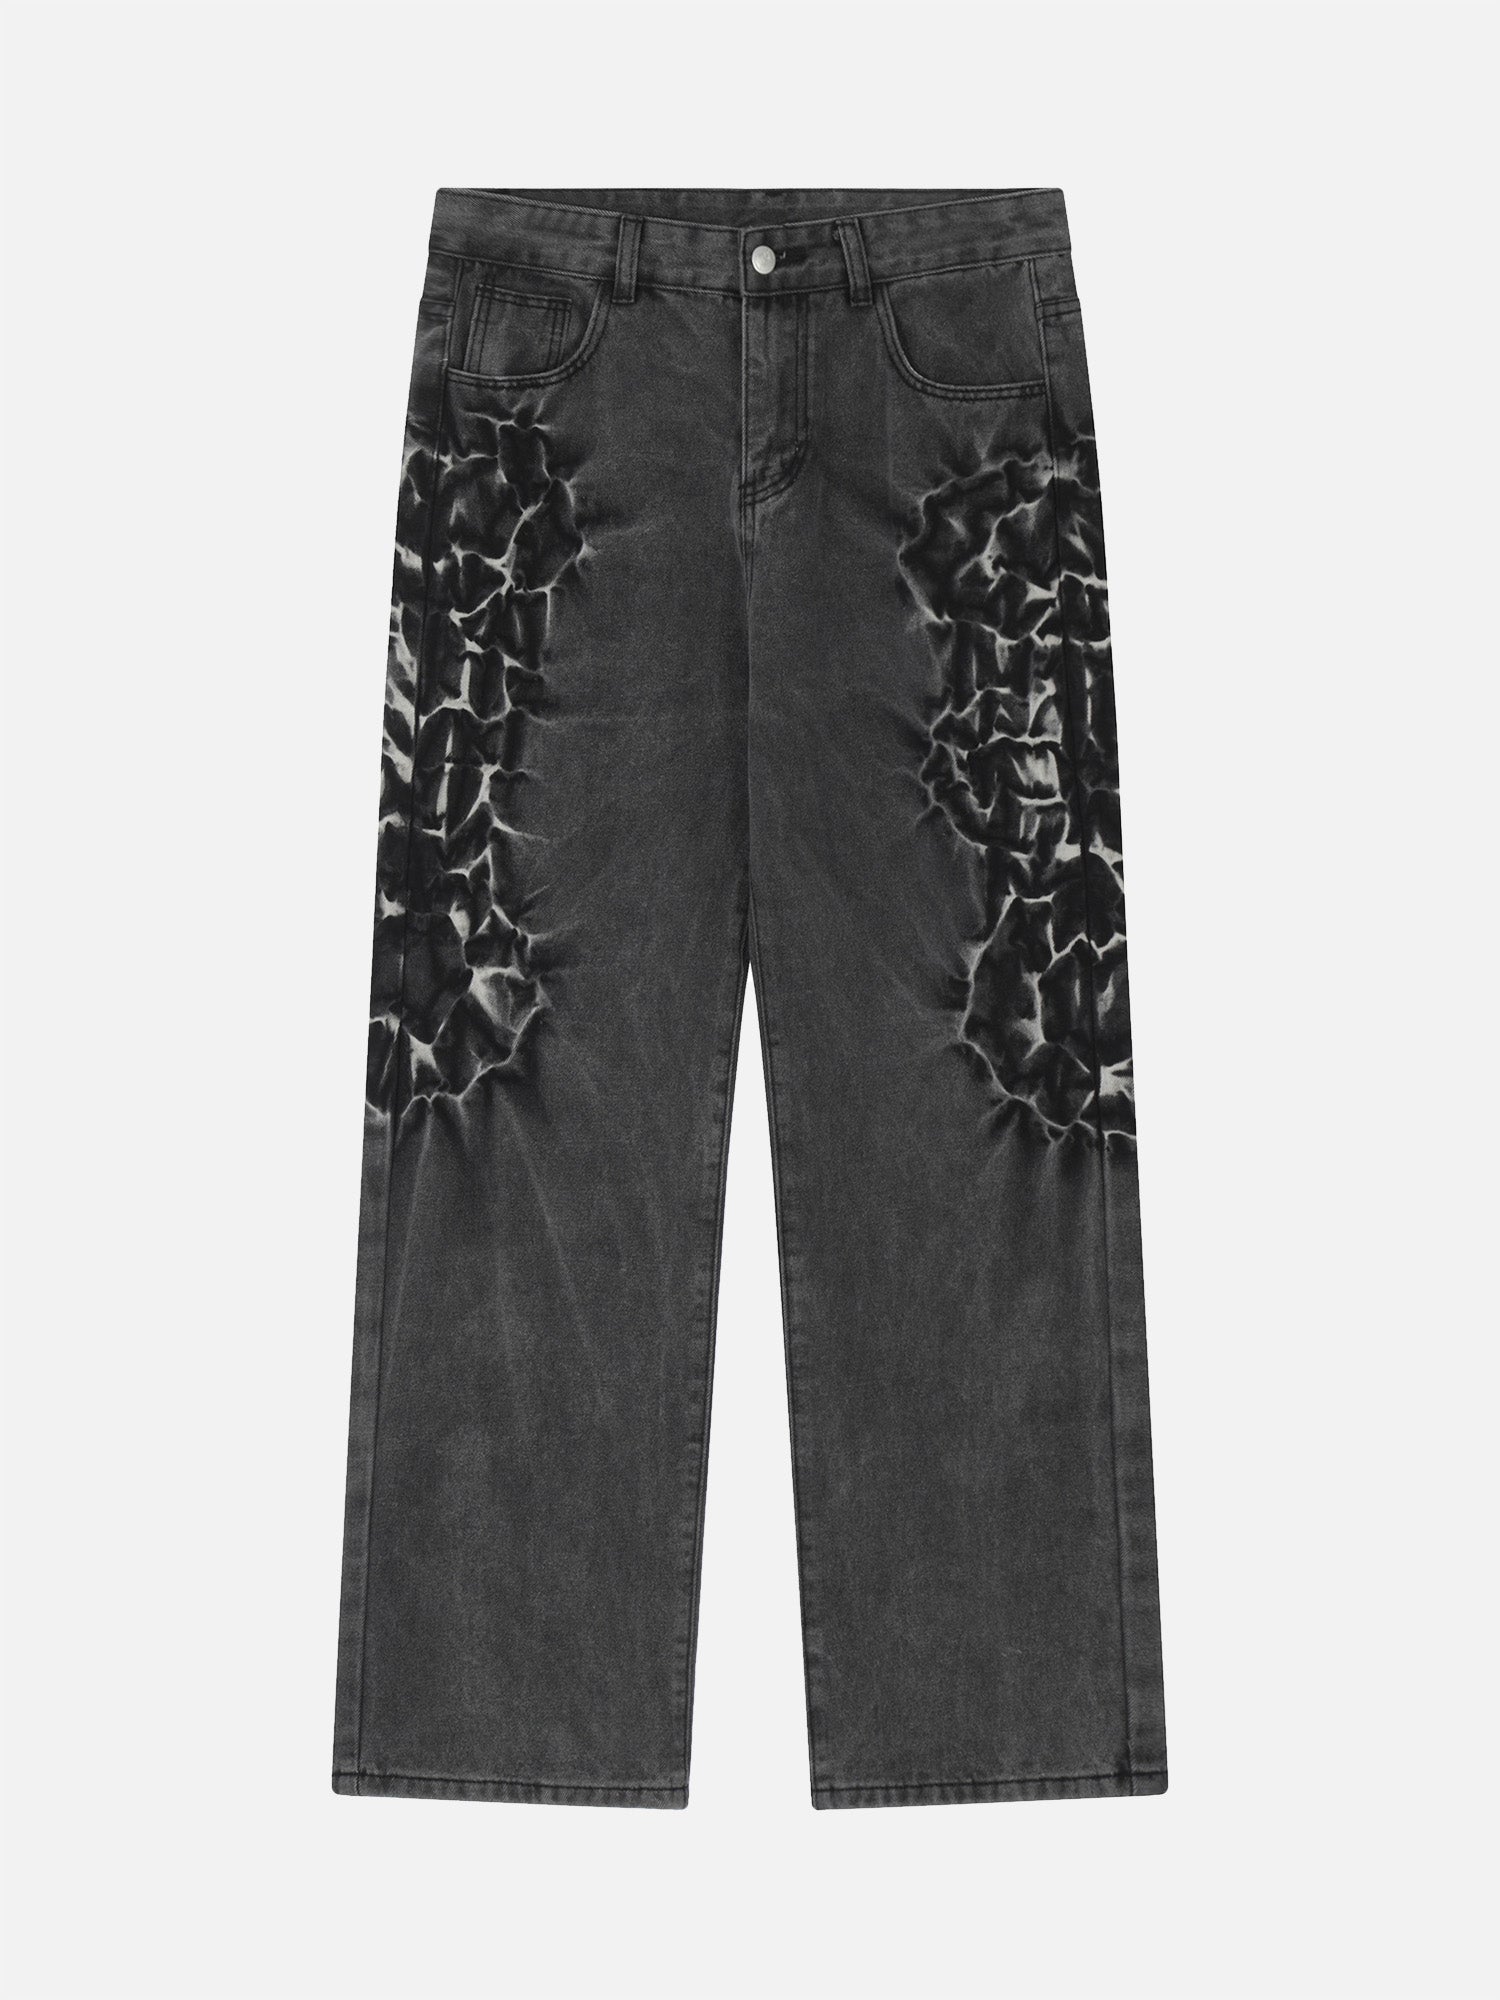 Street Trend Washed Dark Distressed Design Jeans